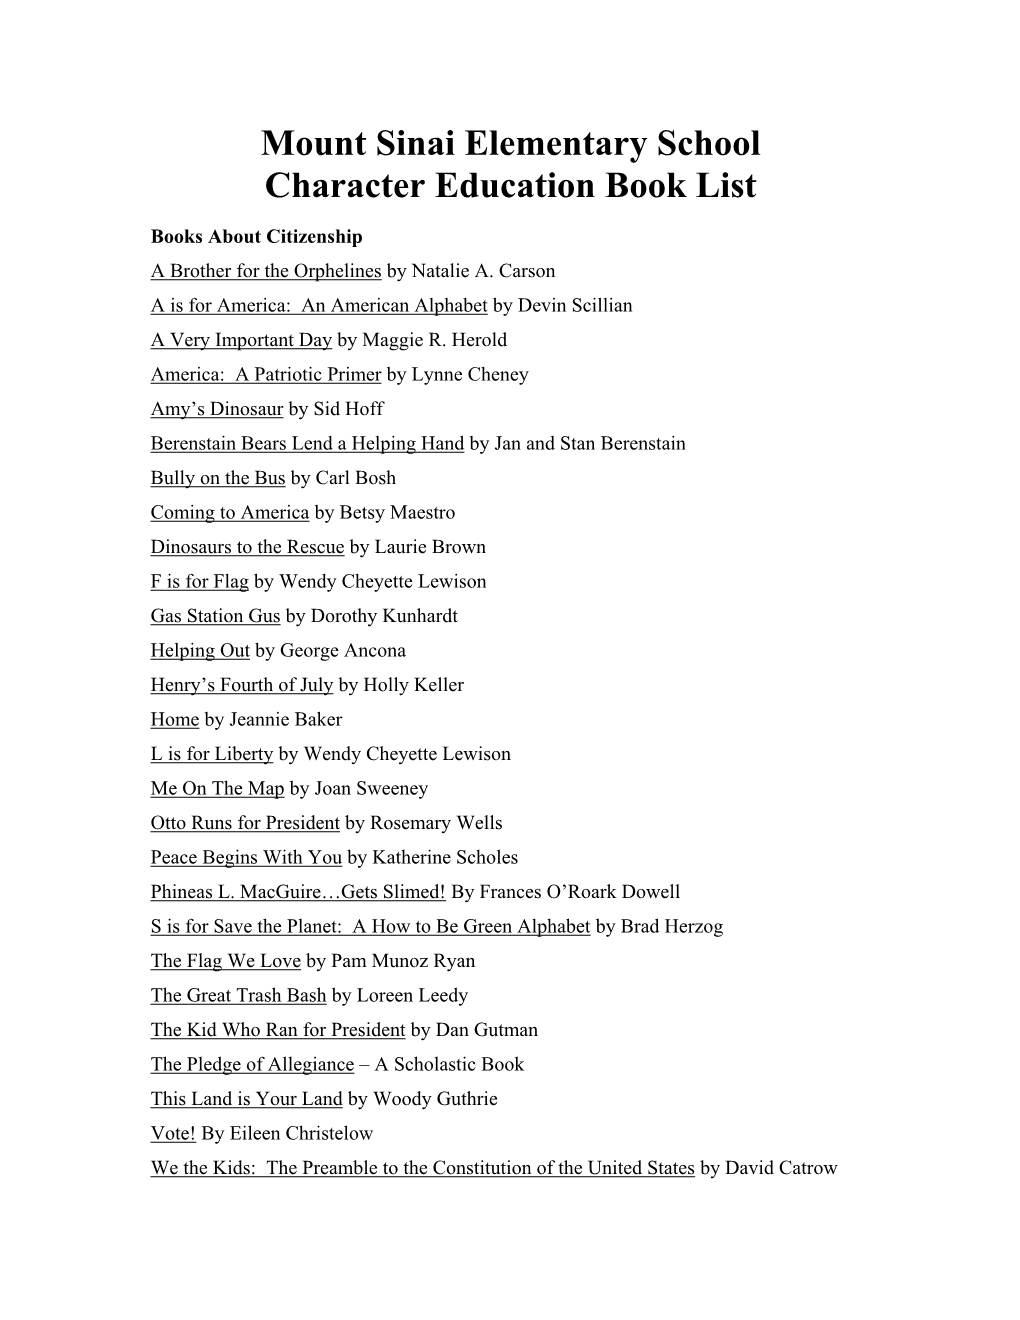 Mount Sinai Elementary School Character Education Book List